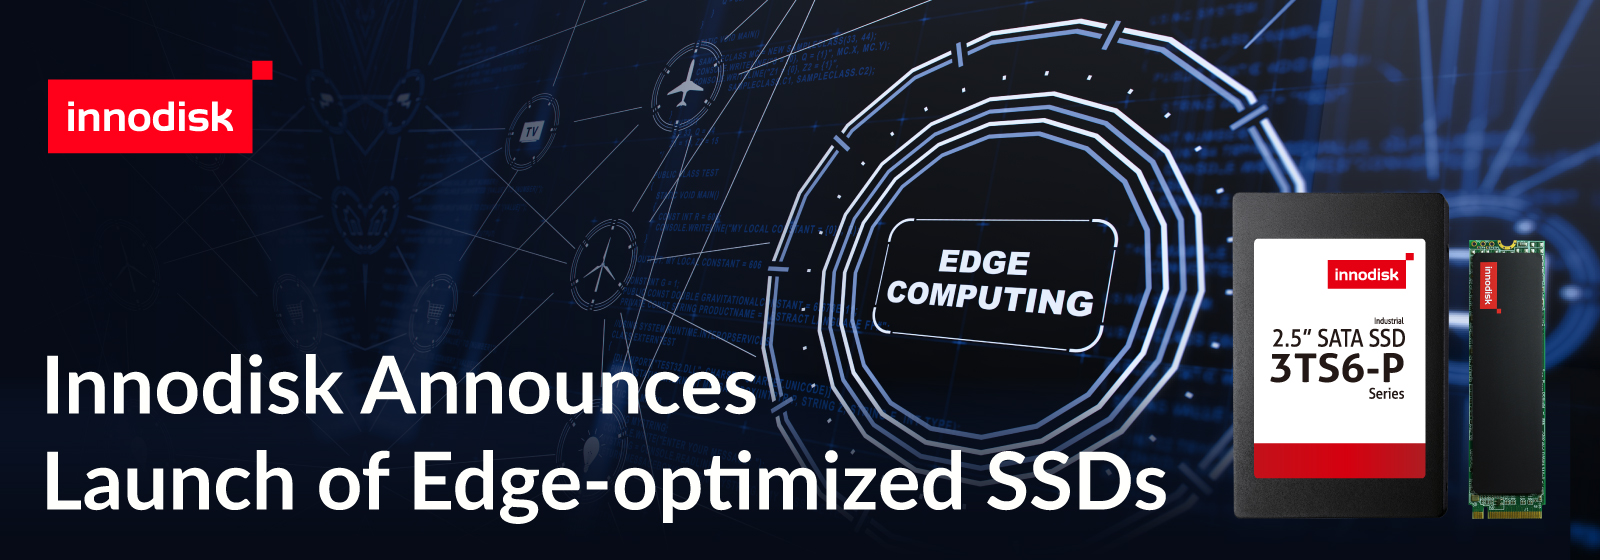 SSD Edge AI by Innodisk